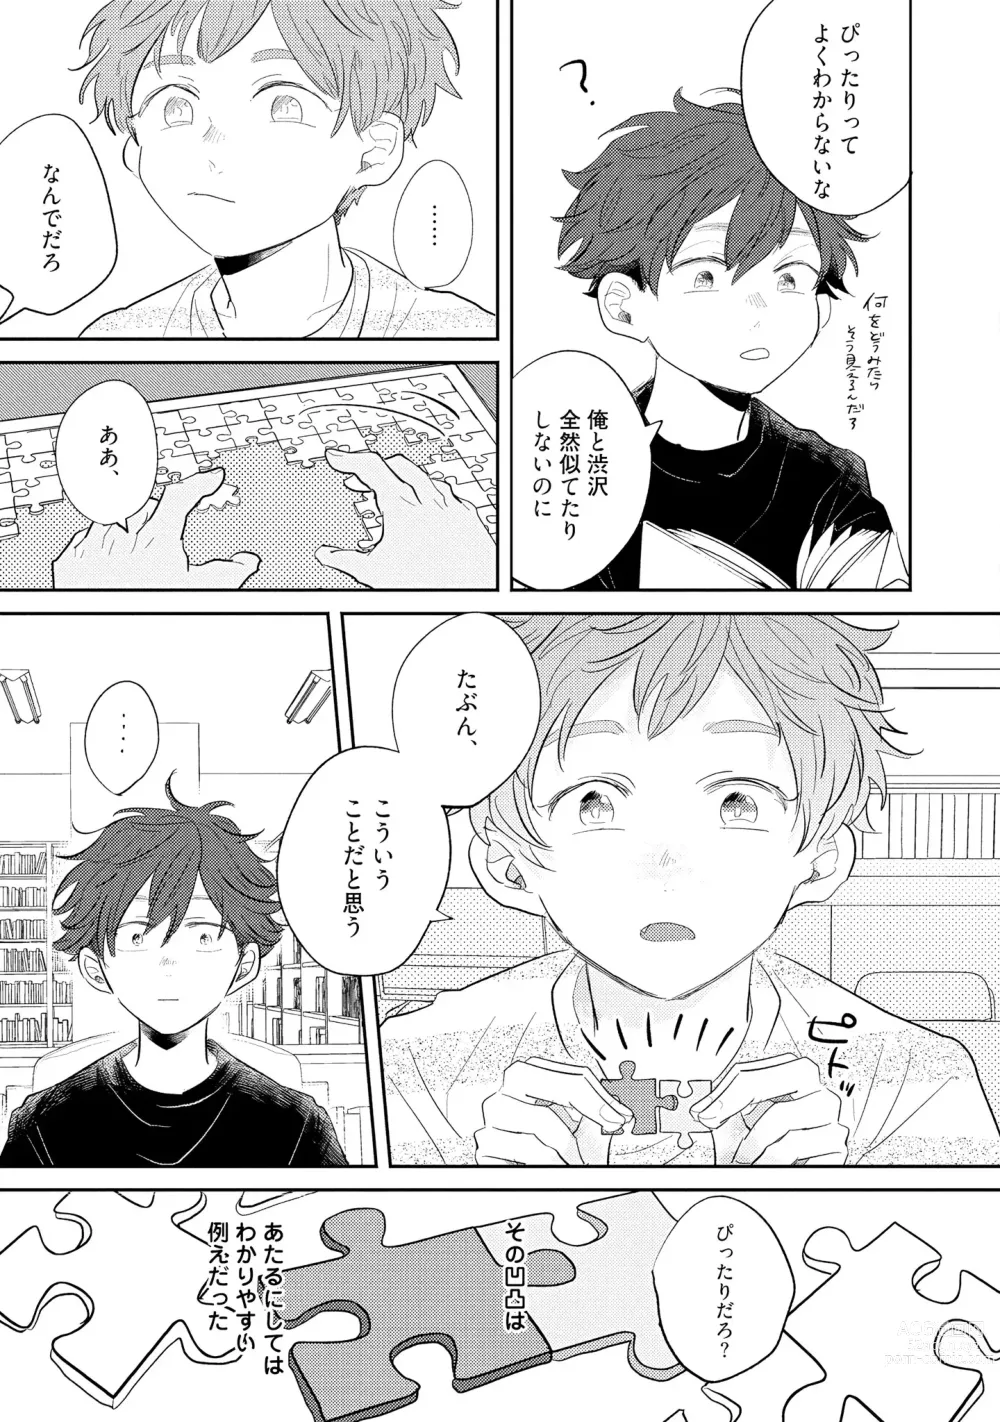 Page 17 of manga No Doubt Lilac